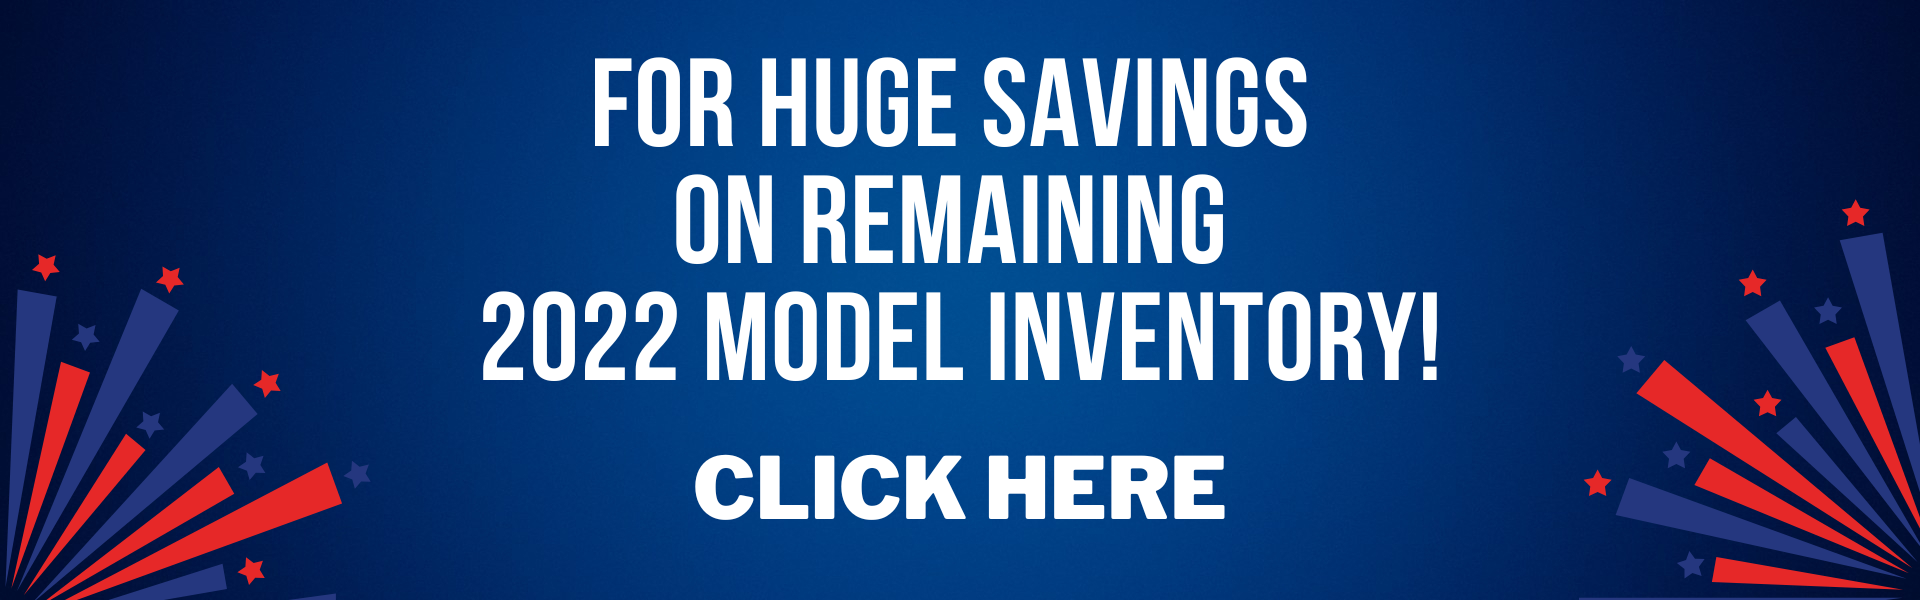 Savings on Remaining 2022 Model Inventory